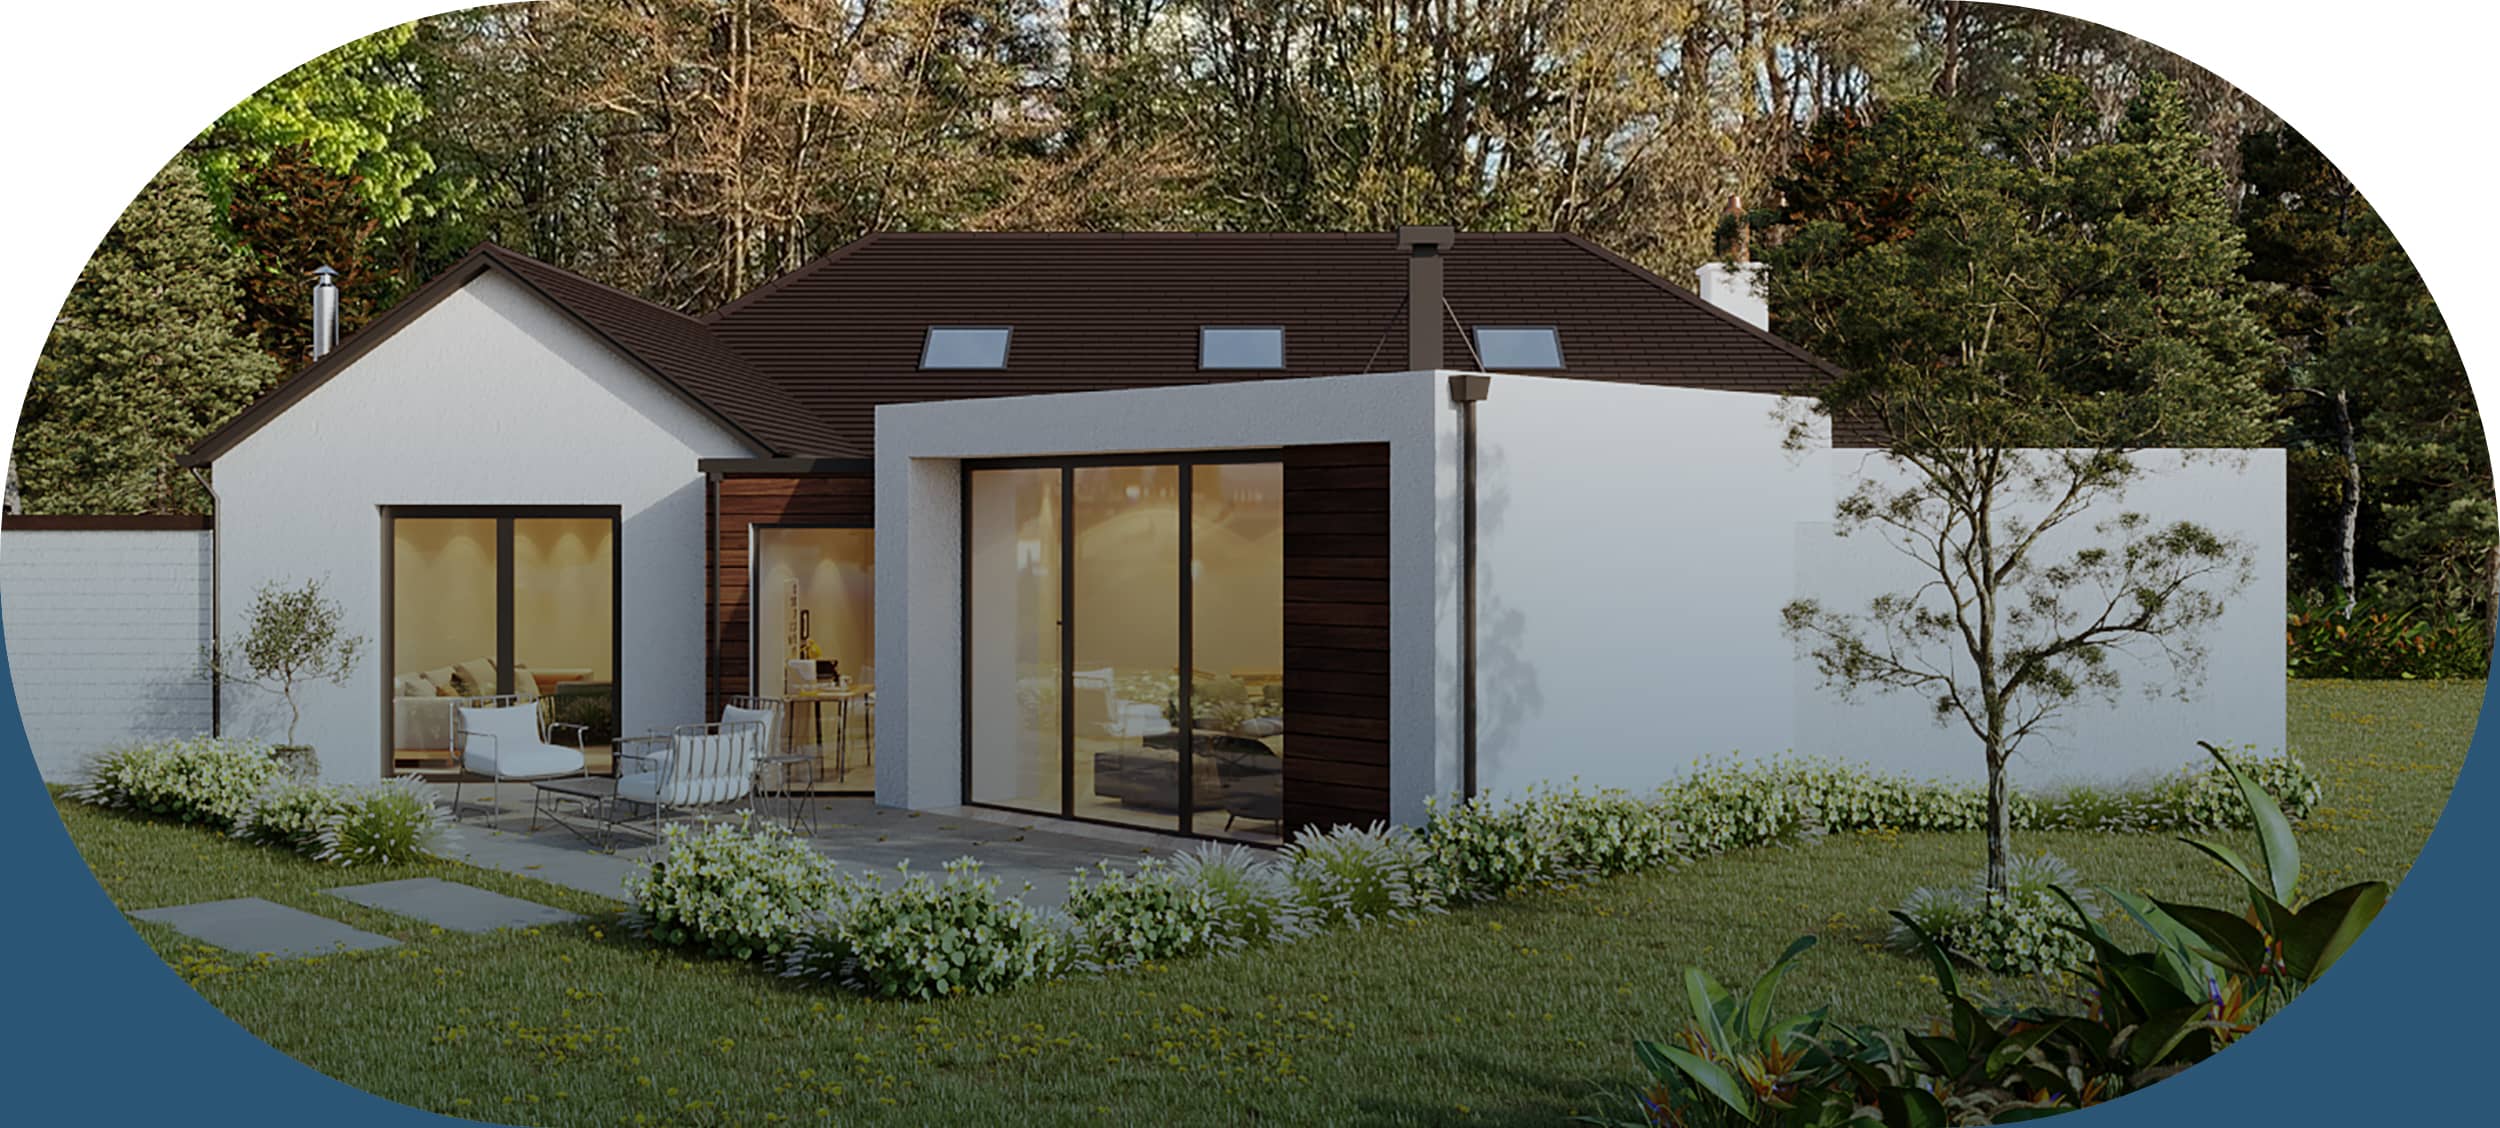 designer home set in gardens